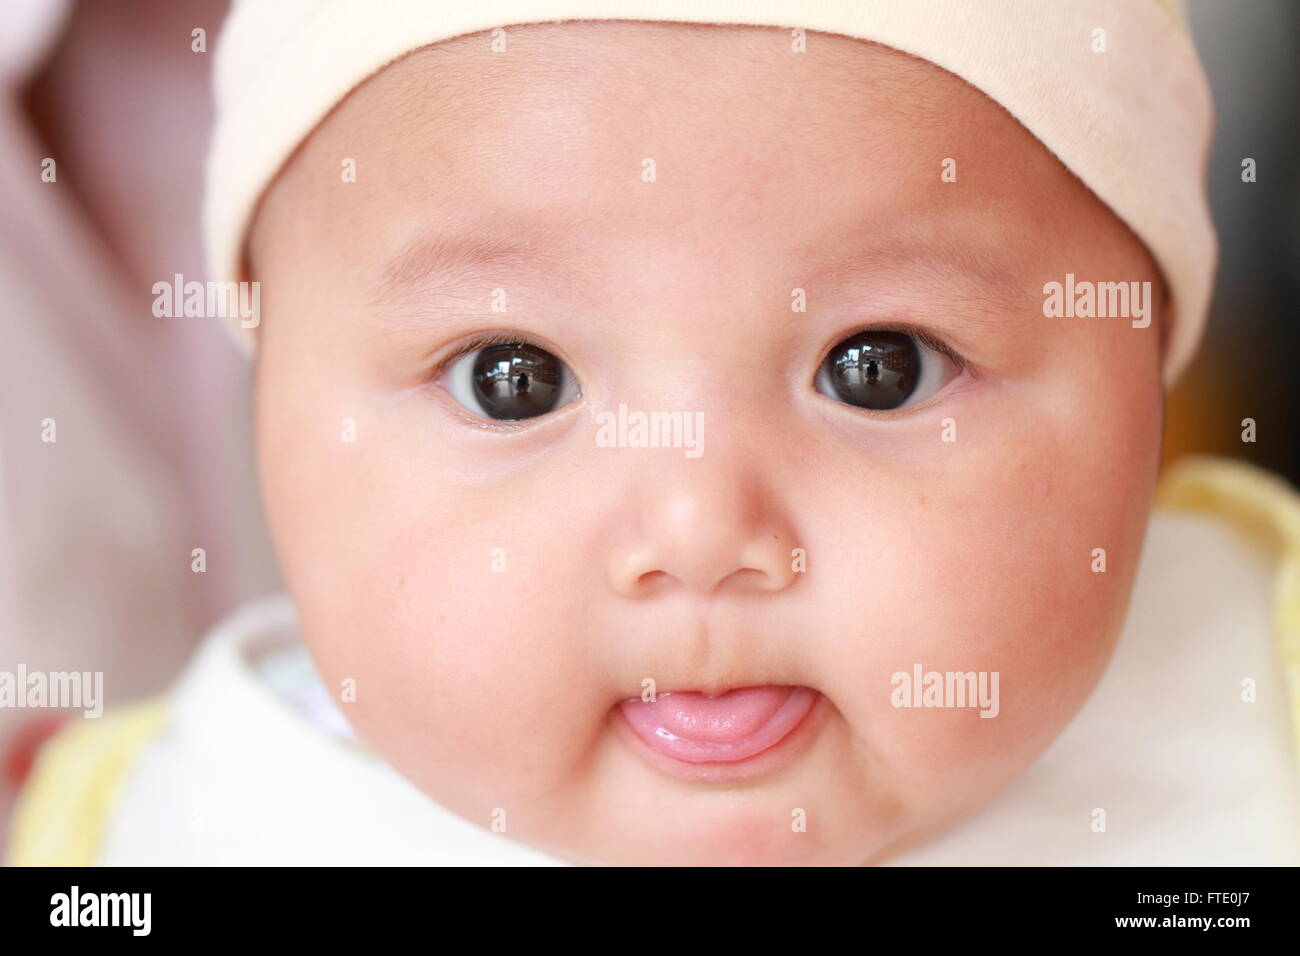 Cute baby looking at the camera Stock Photo